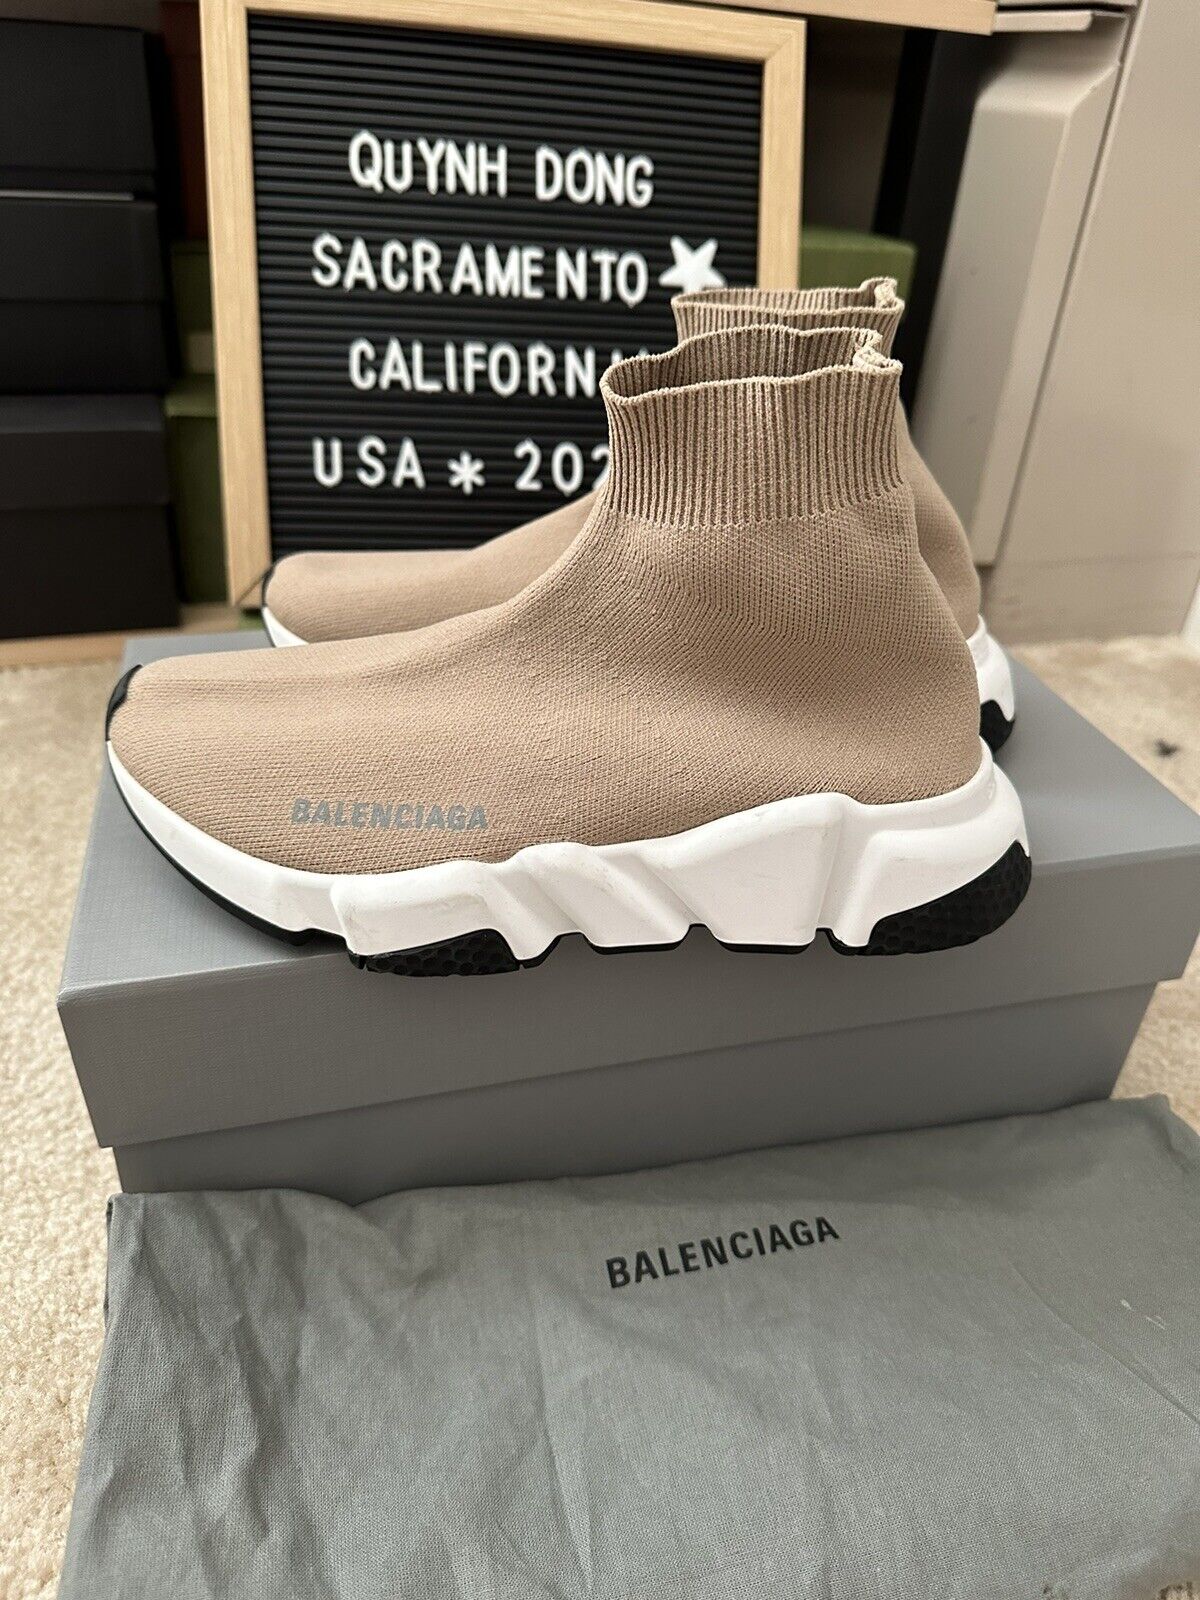 balenciaga shoes women size US 5. Retail $990 - image 5